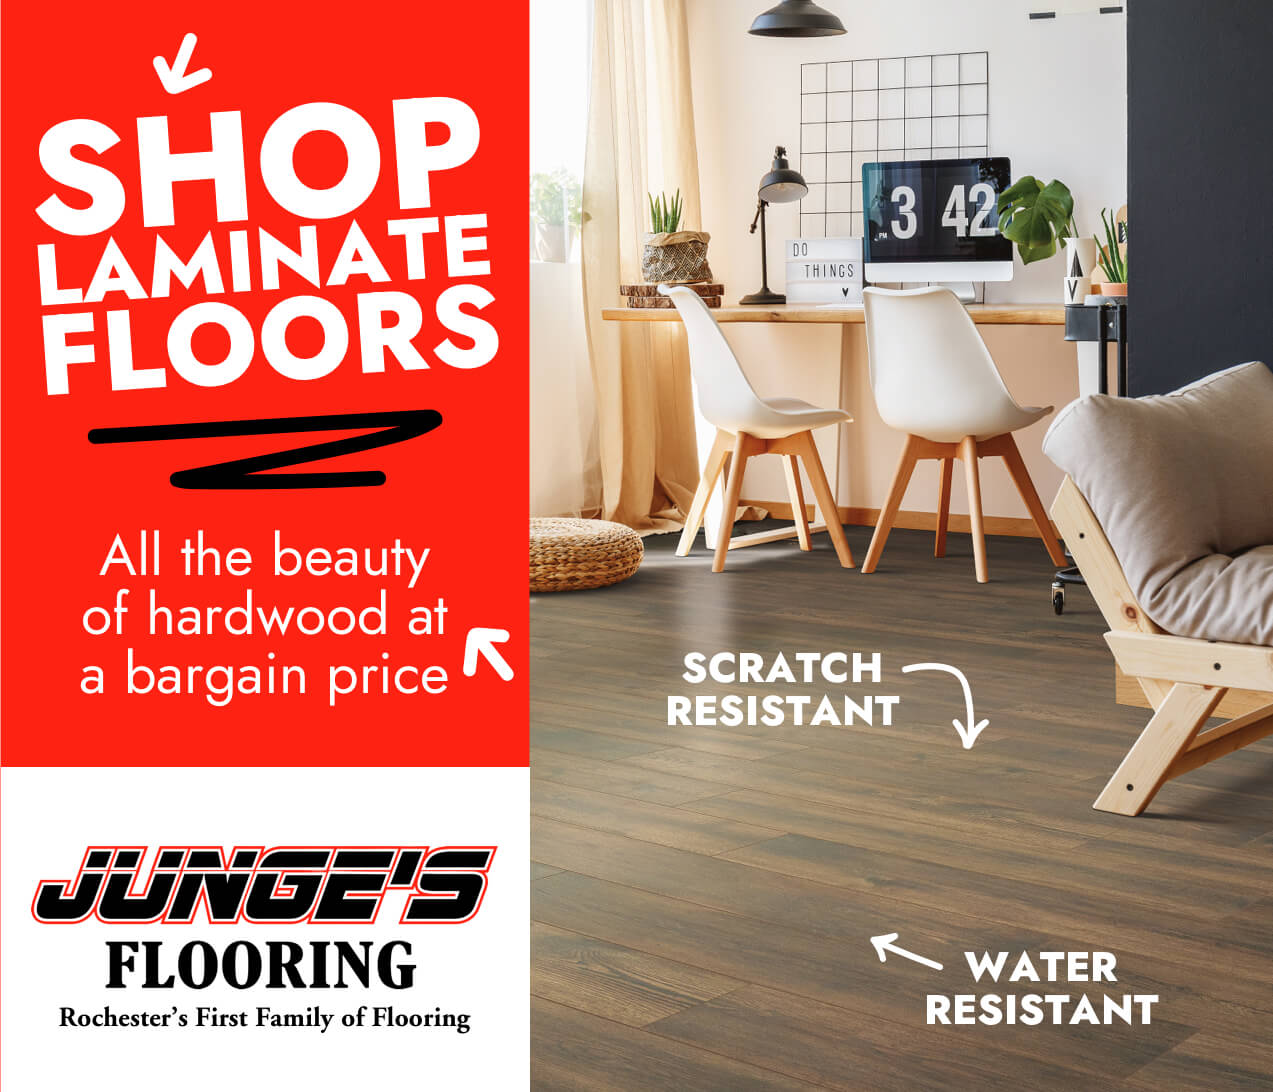 Shop laminate floors | Junge's Flooring